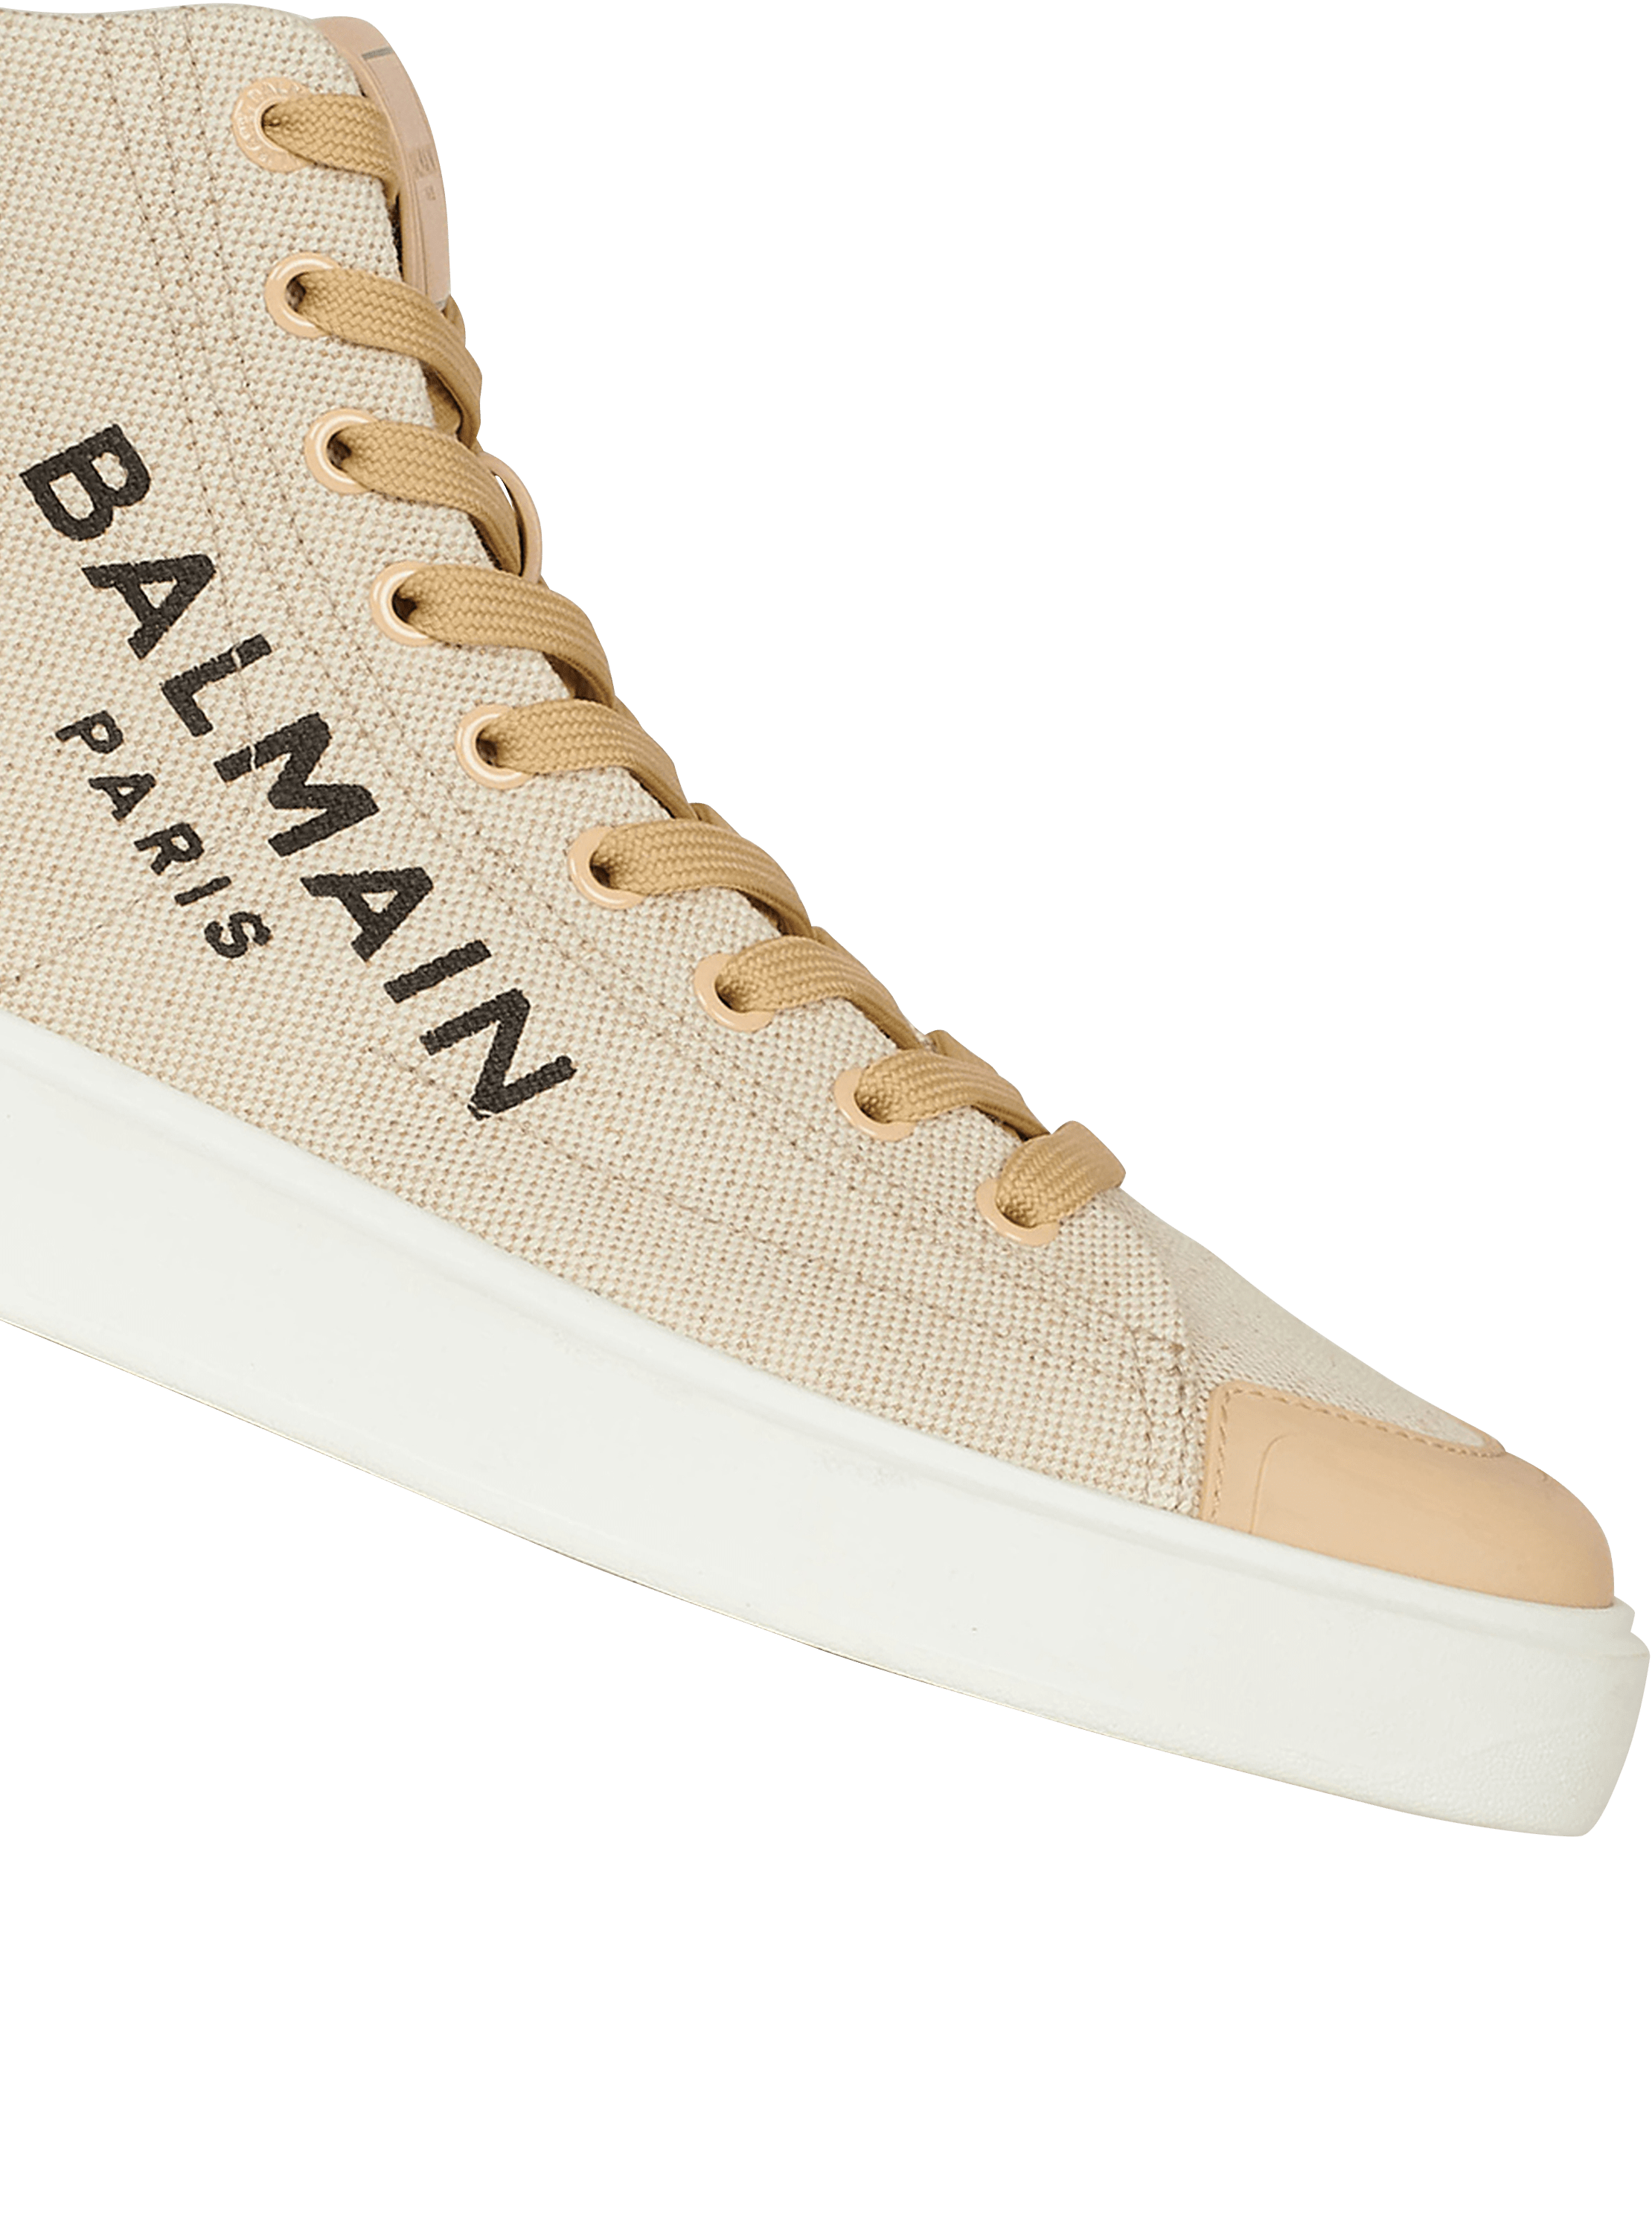 Balmain B-Court Monogram Canvas White / Black High Top Sneakers